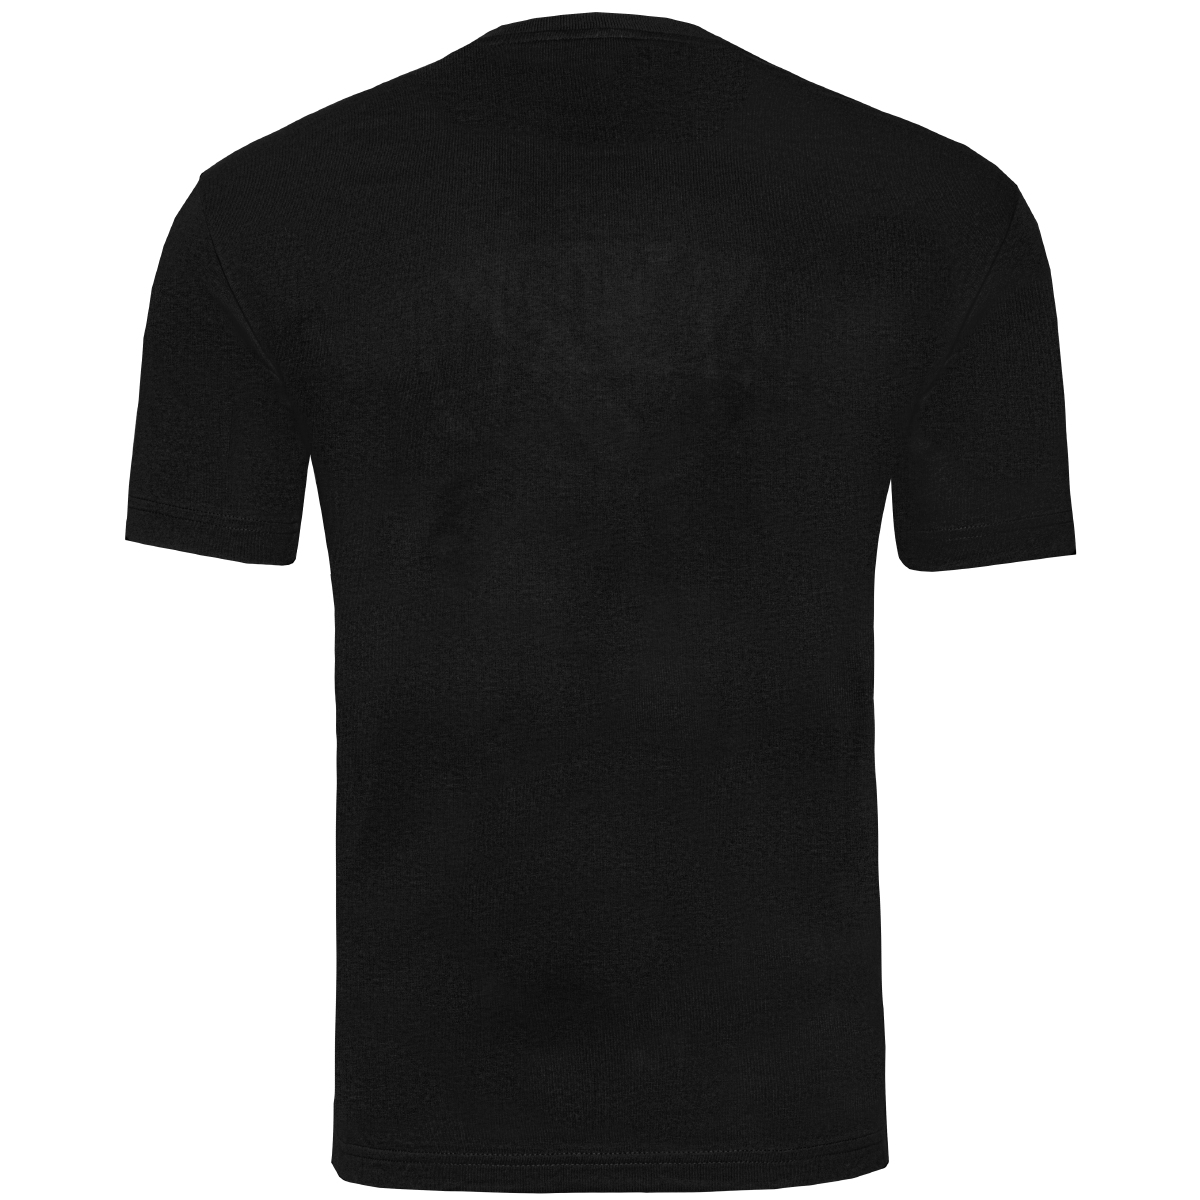 Champion Crewneck T-Shirt schwarz